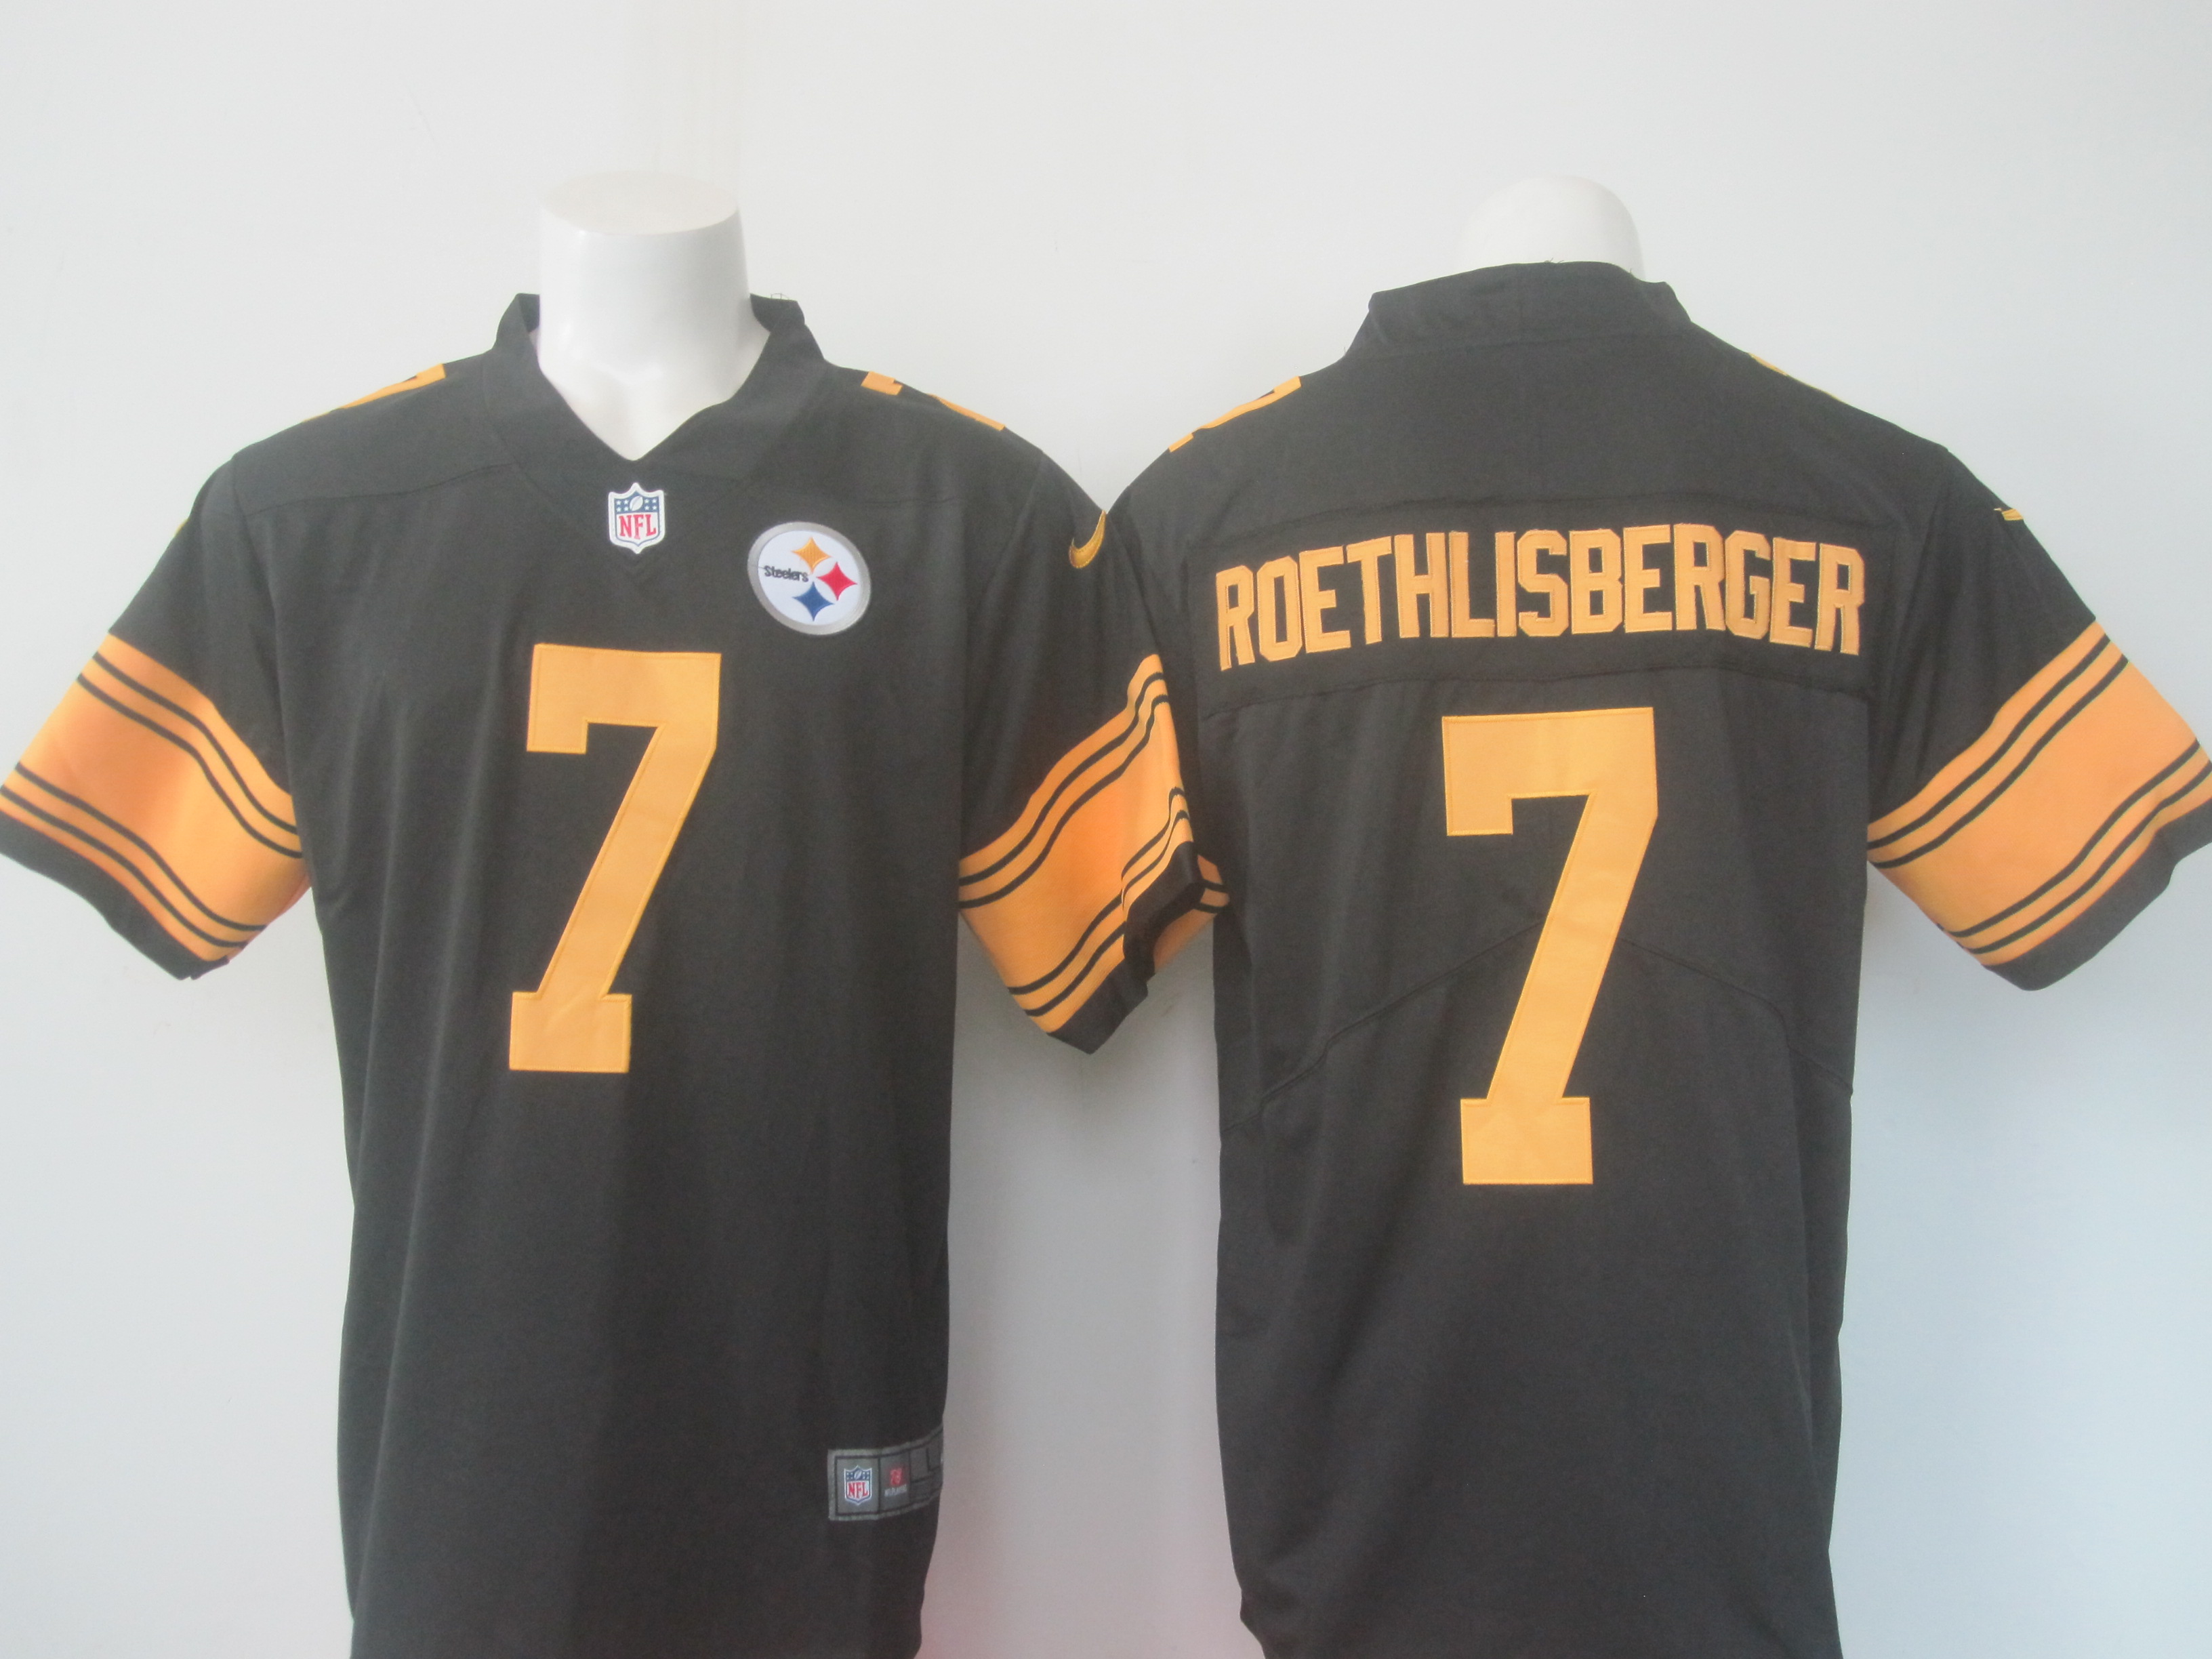 Men's Nike Steelers #7 Ben Roethlisberger Black Limited Rush Stitched NFL Jersey